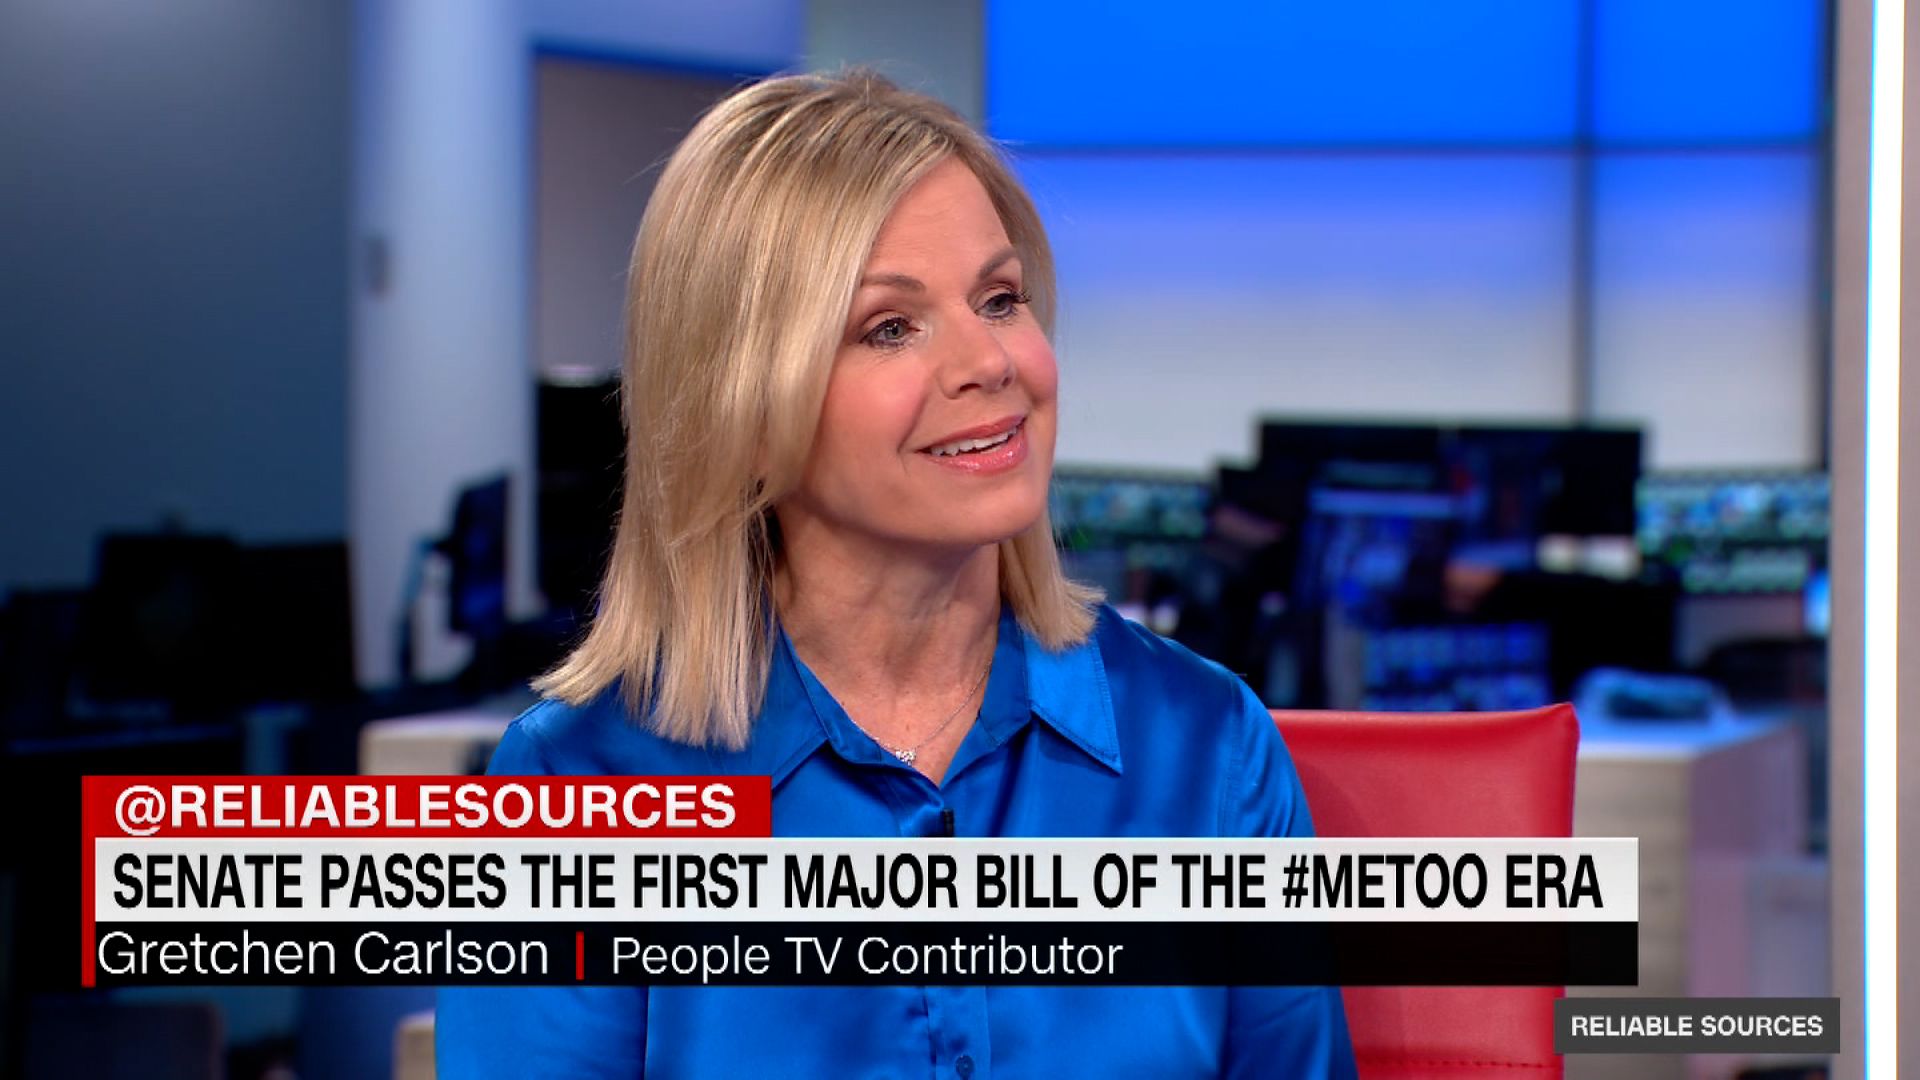 Gretchen Carlson heralds passage of #MeToo bill | CNN Business